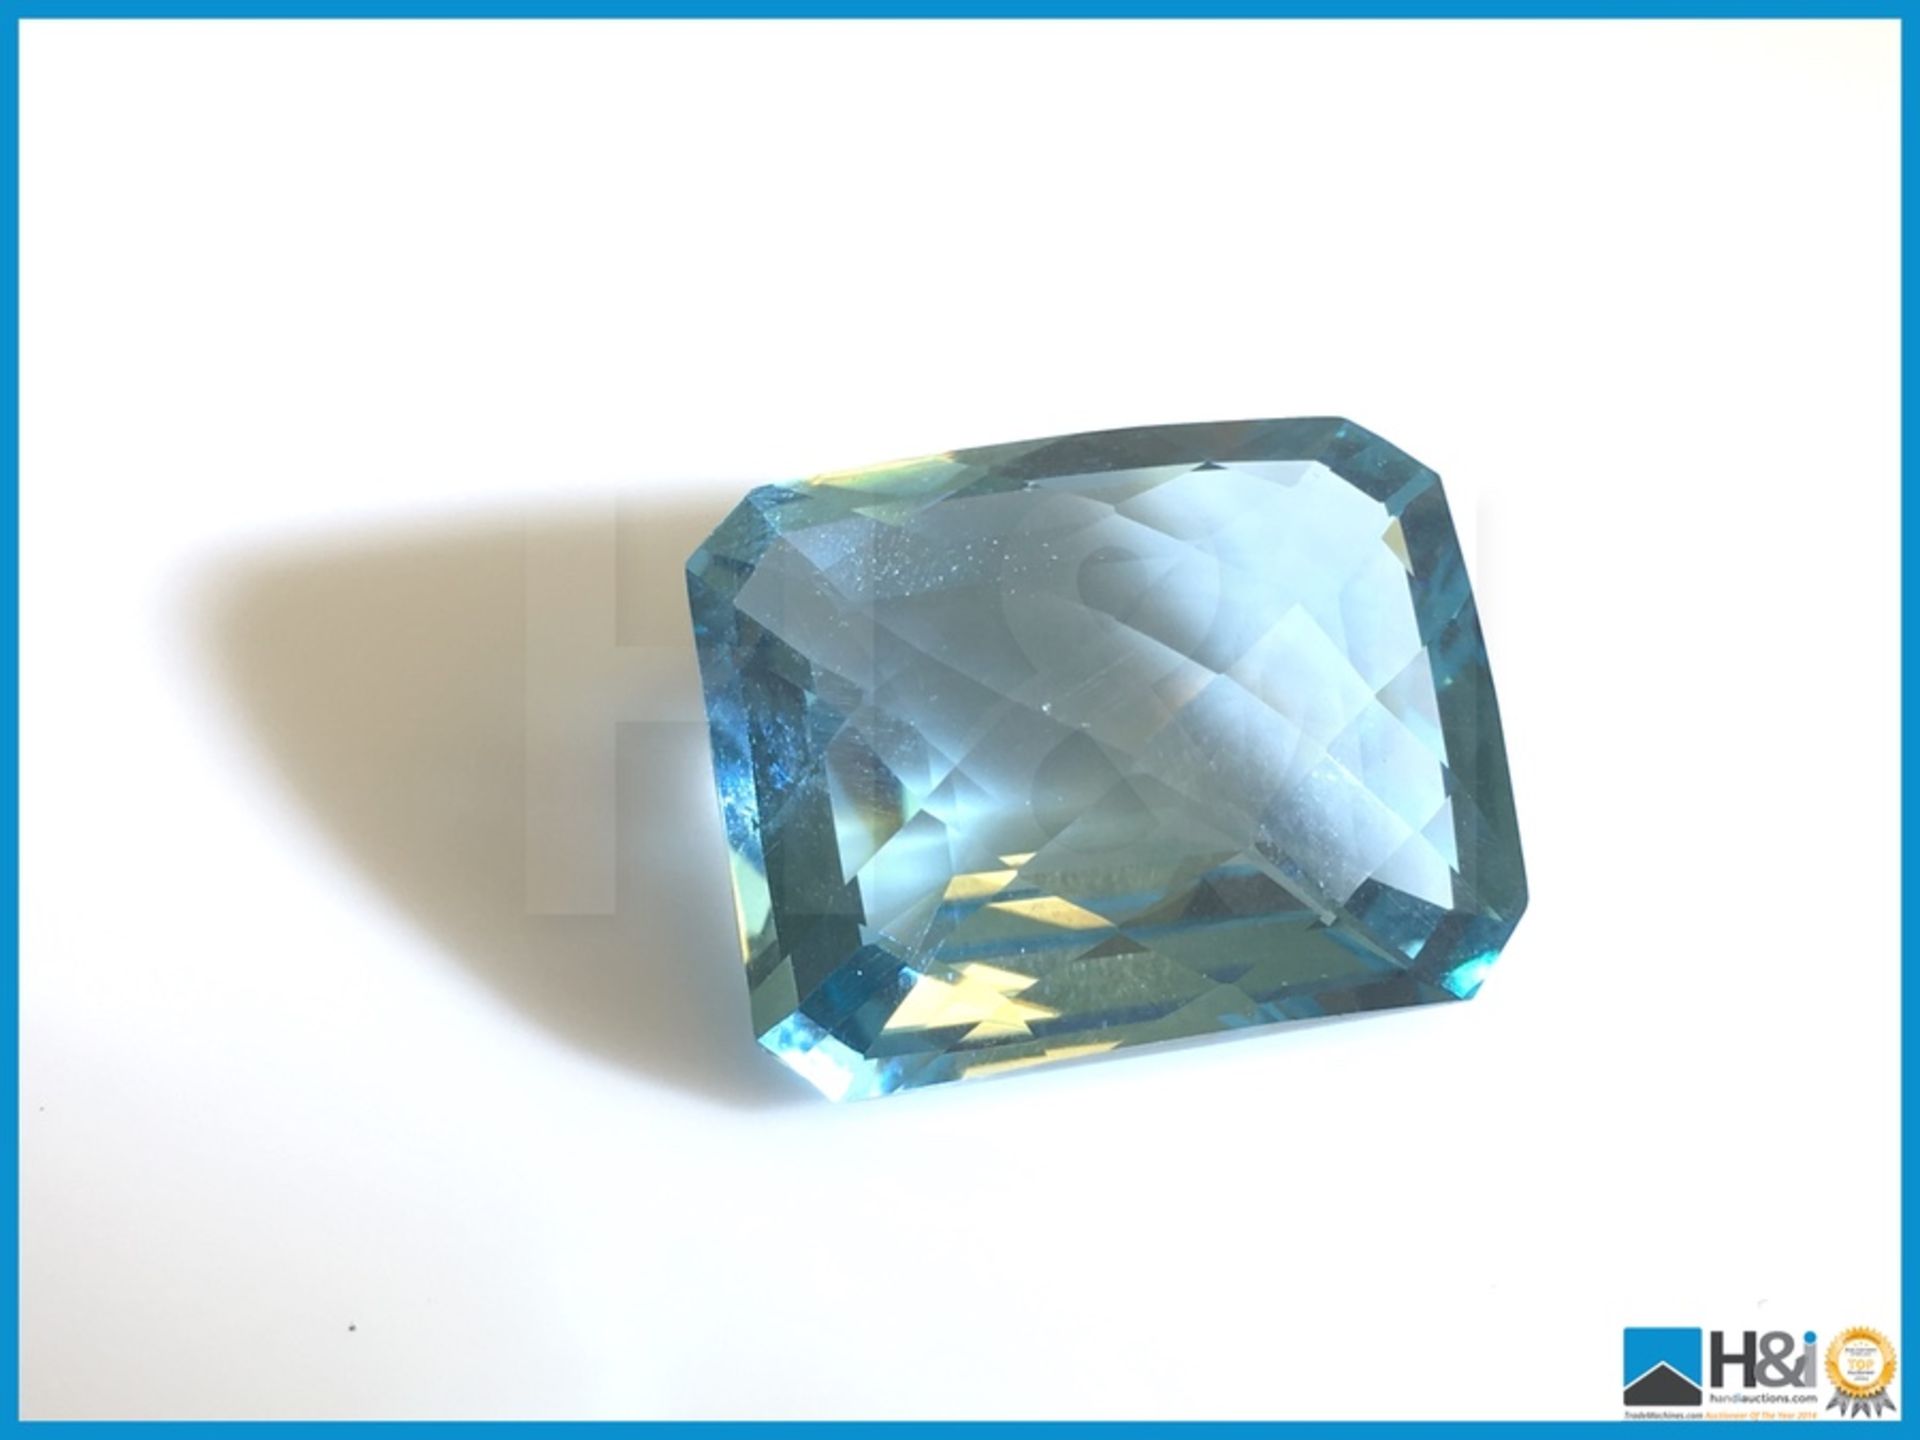 25.85ct Natural Blue Beryl (Aquamarine) Emeral Cut, Transparent 21x17x11mm. Certification: None